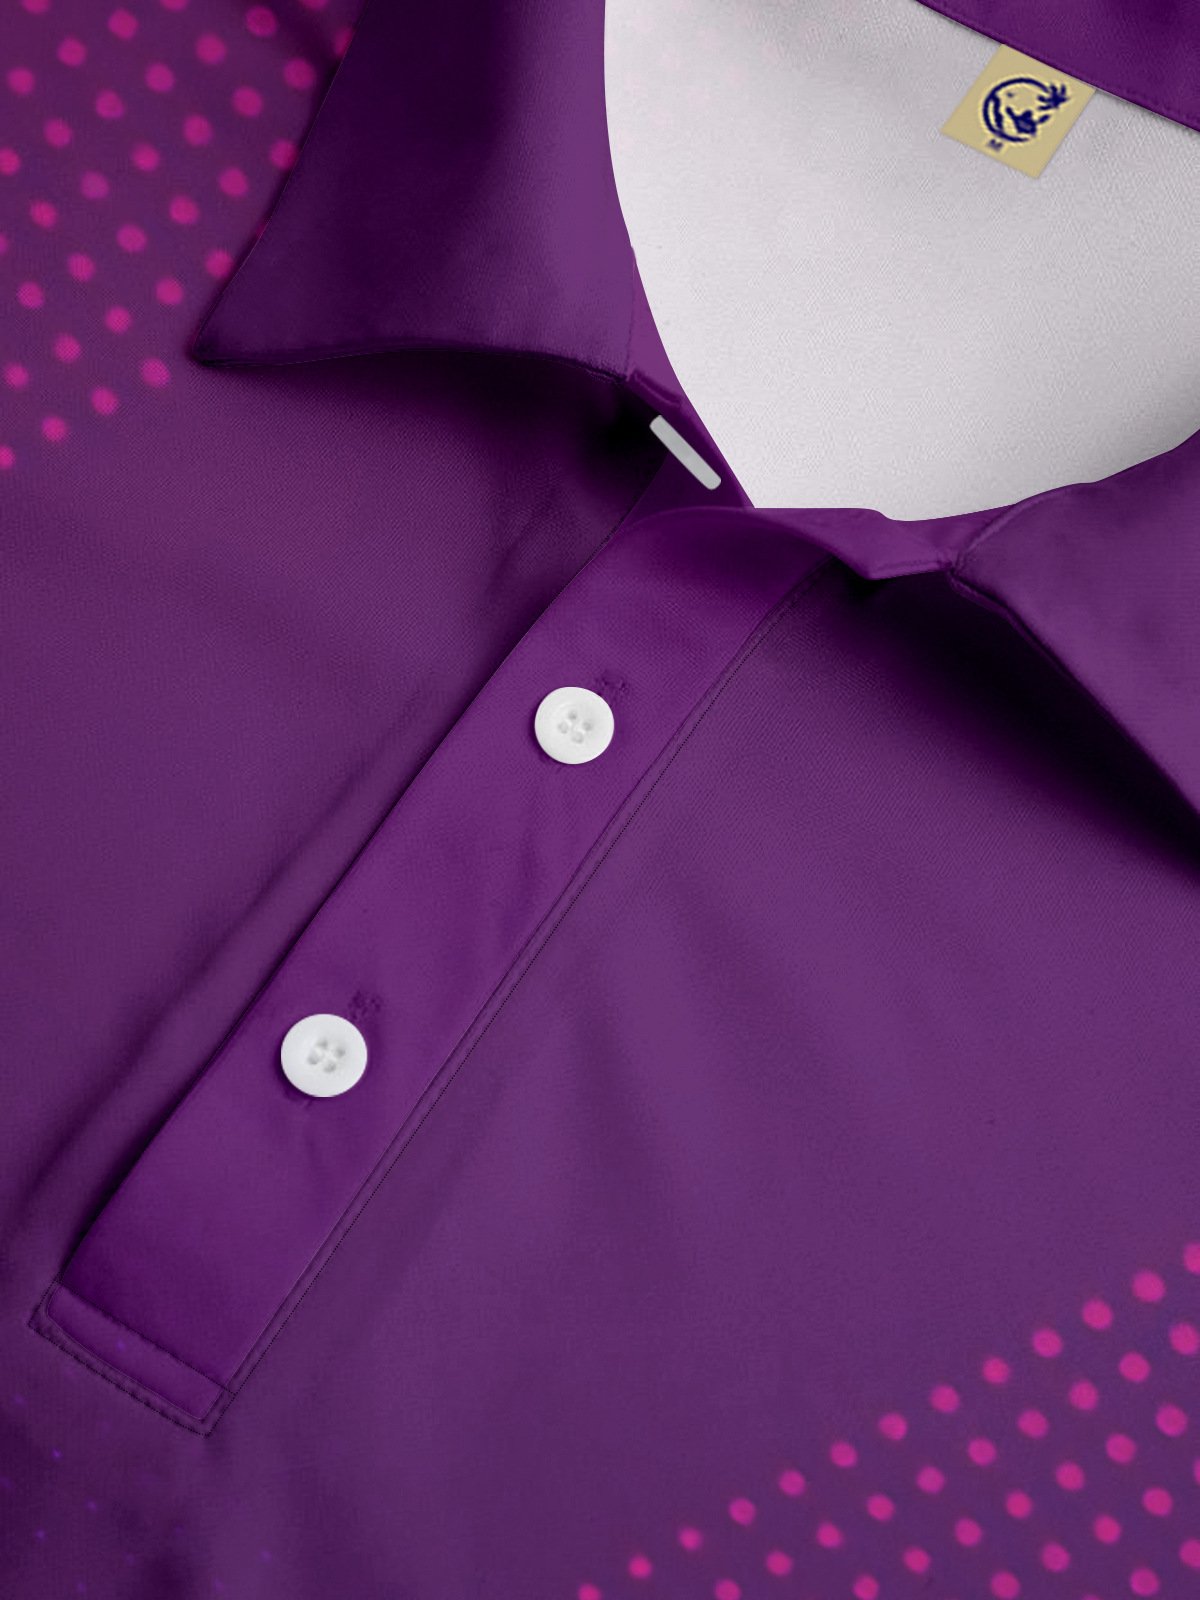 Hardaddy Gradient Polka Dots Button Short Sleeve Polo Shirt